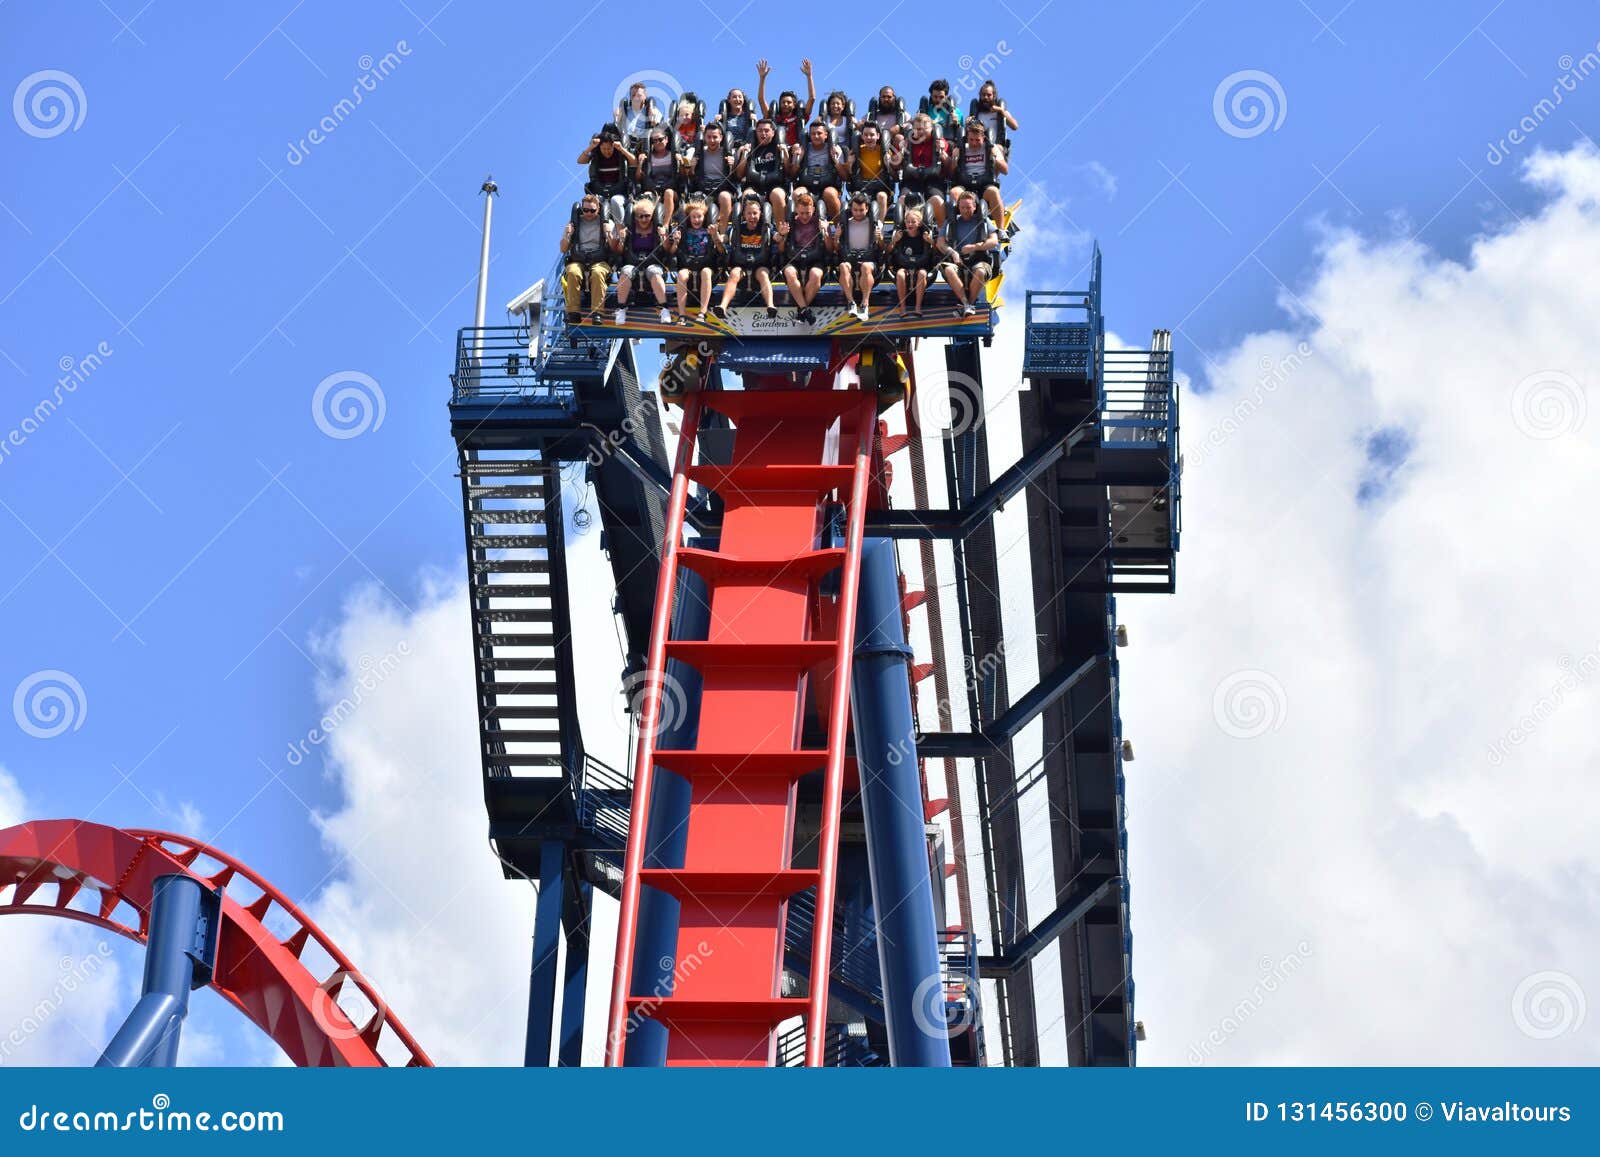 Incredible Sheikra Rollercoaster At Bush Gardens Theme Park